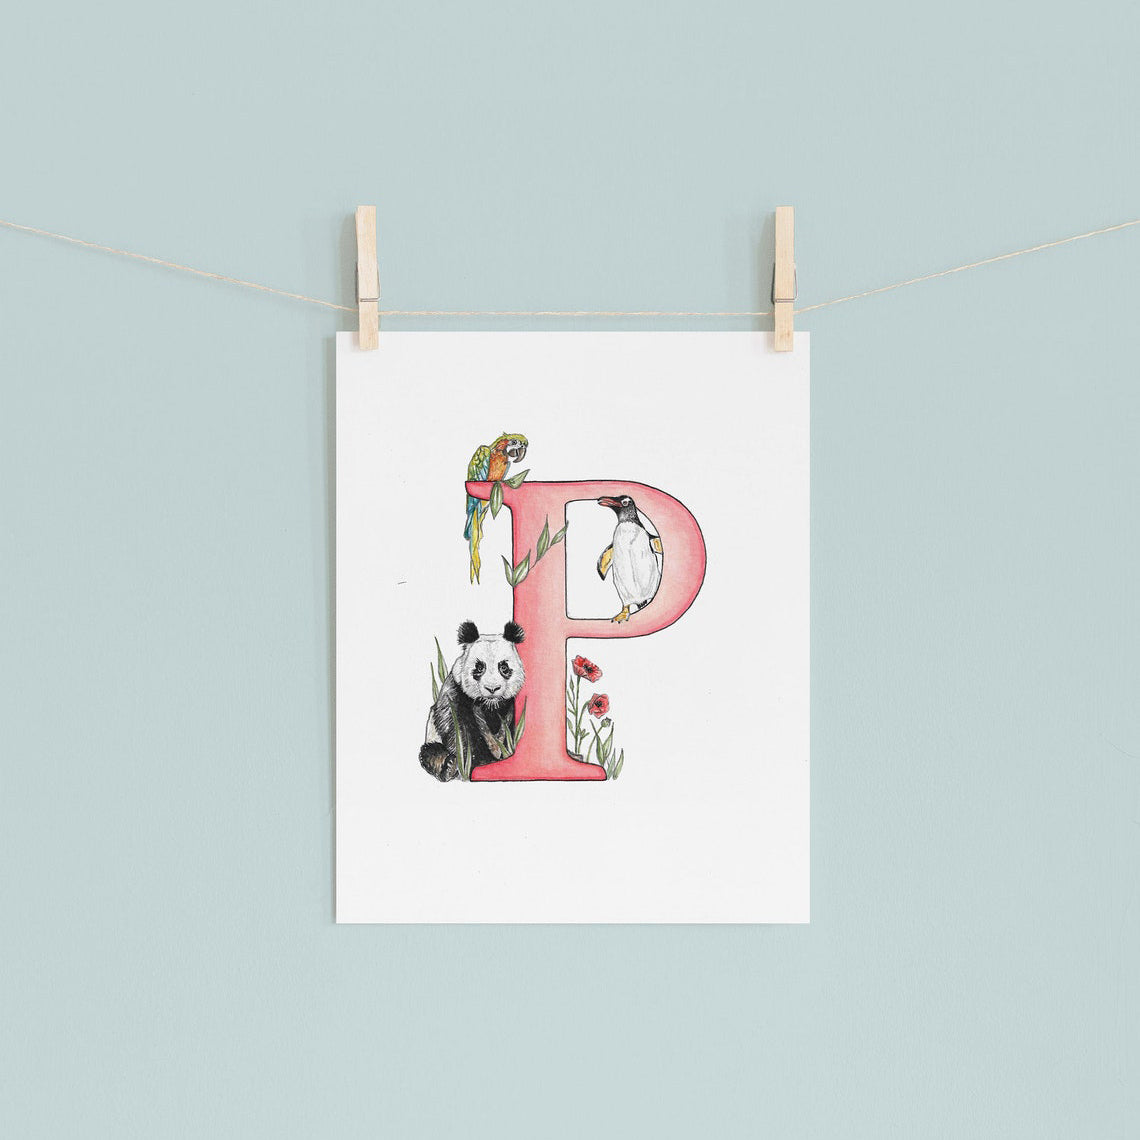 'P' Letter Print - A4 - Kathryn Pow Art